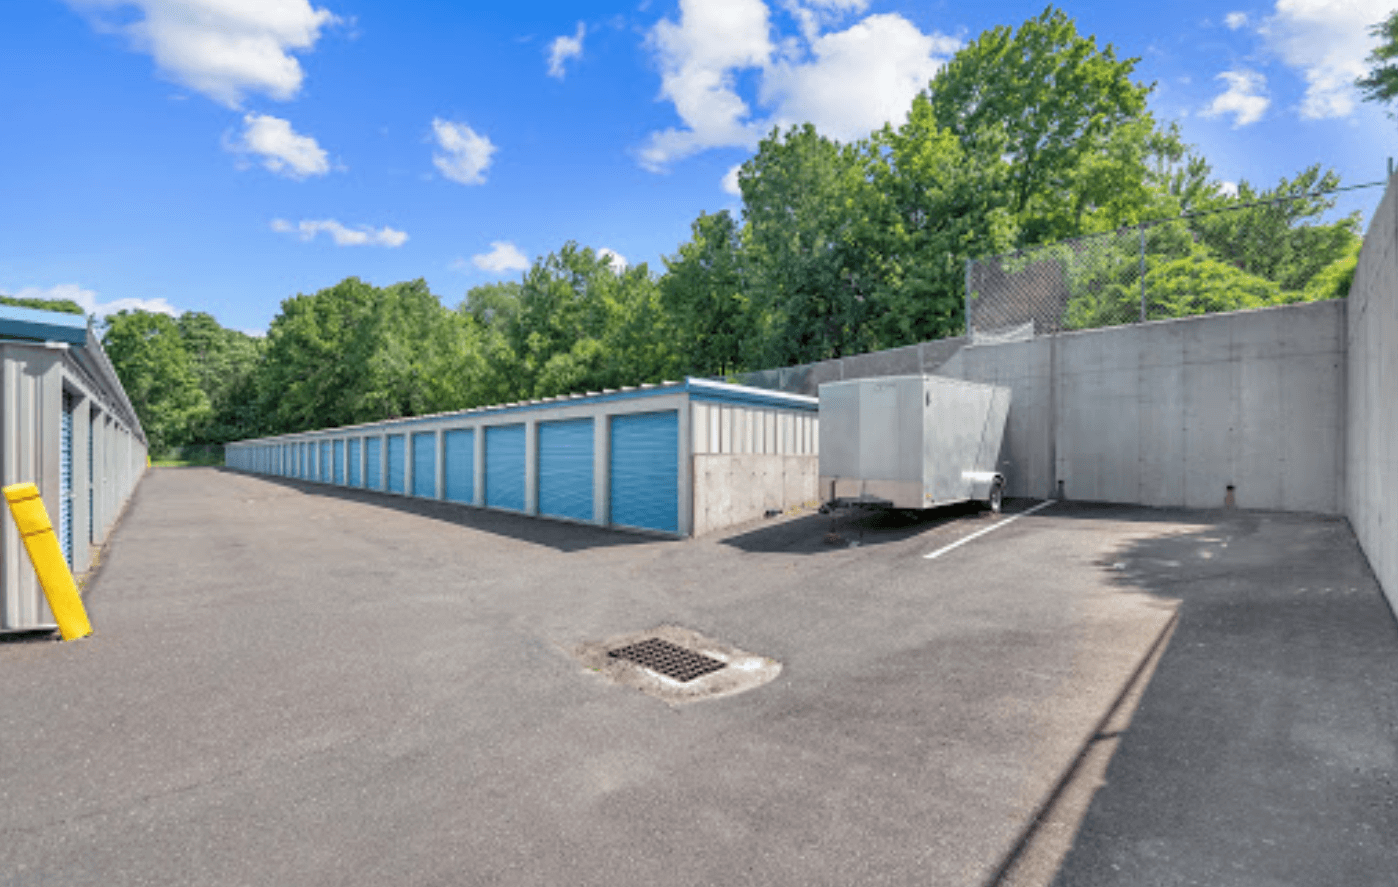 Drive Up Storage Units at Storage Sense in Southington